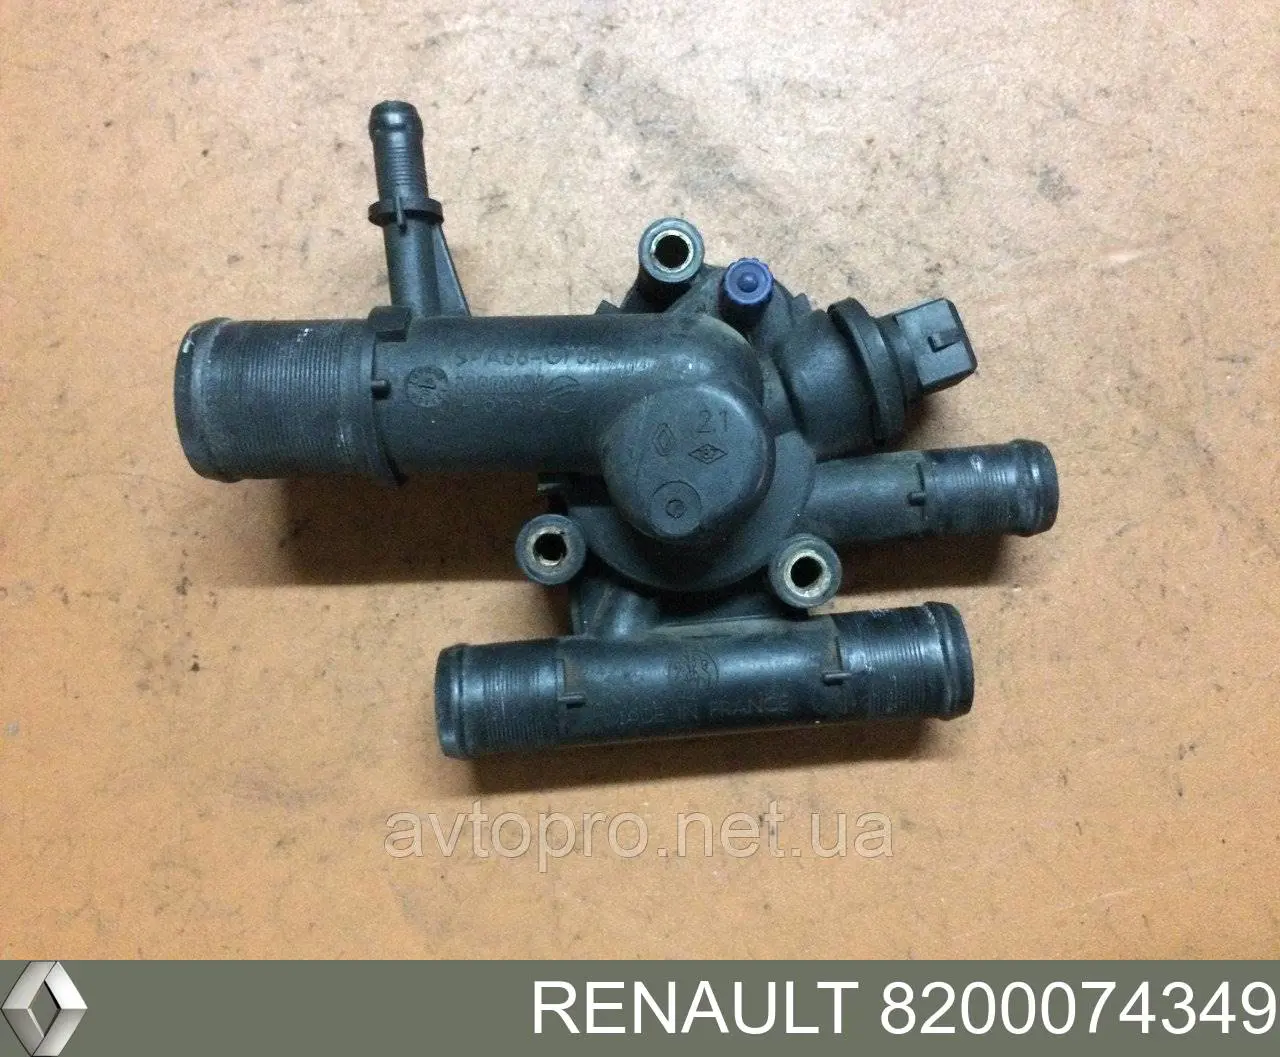 8200074349 Renault (RVI) термостат